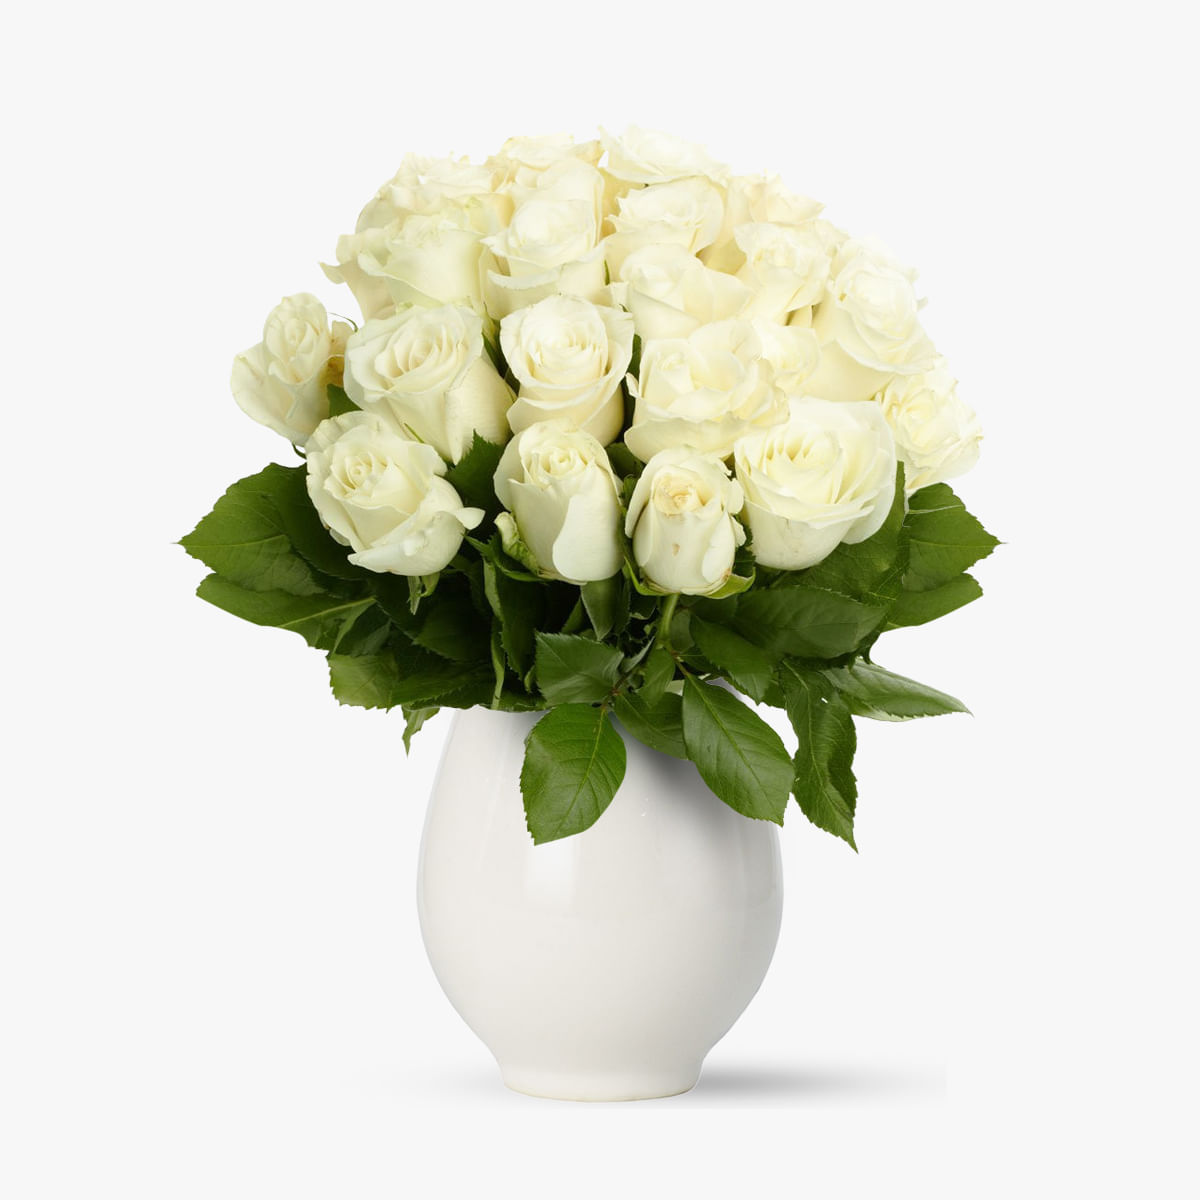 Buchet de 21 trandafiri albi – Standard albi